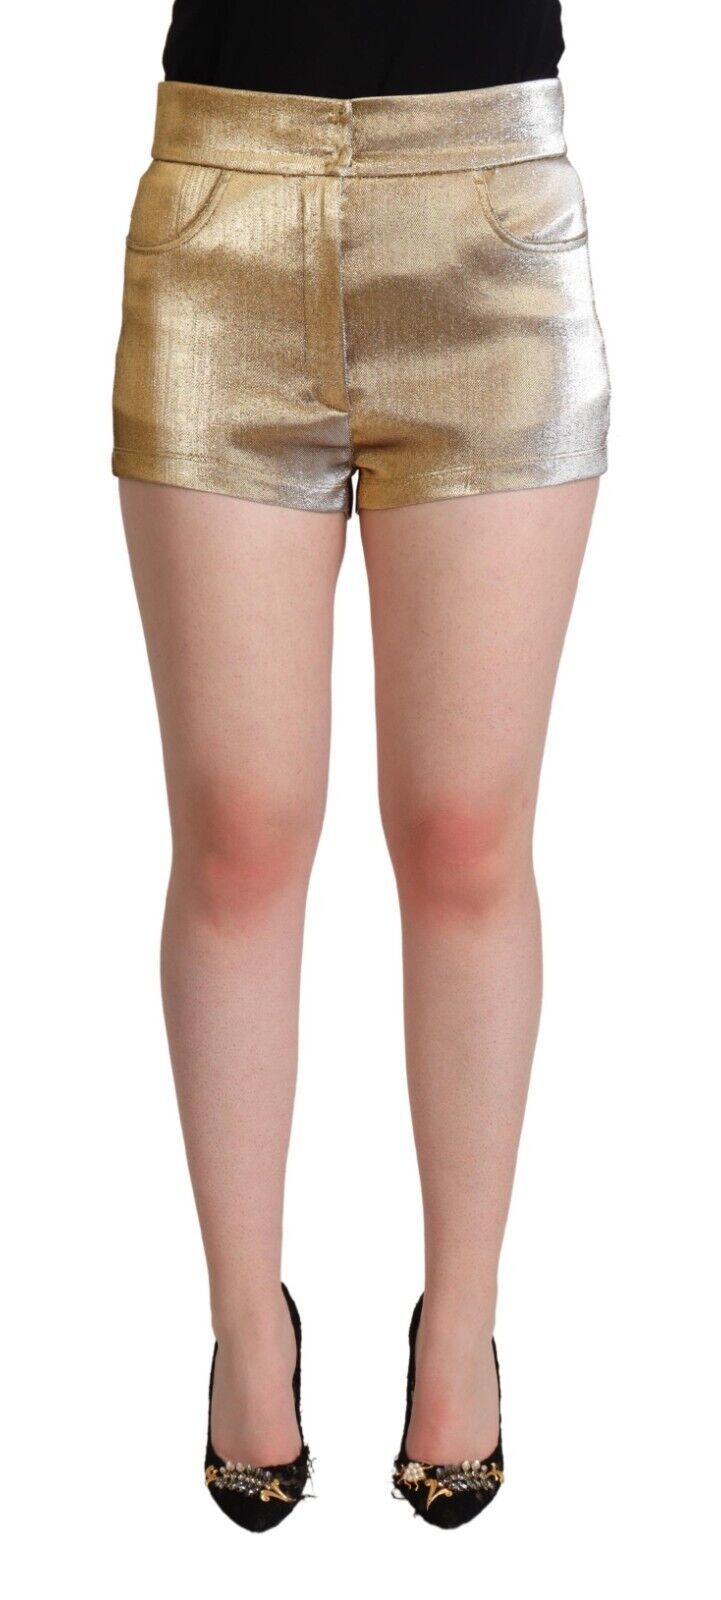 Dolce & Gabbana Metallic Gold Cotton Mid Waist Hot Pants Women's Shorts